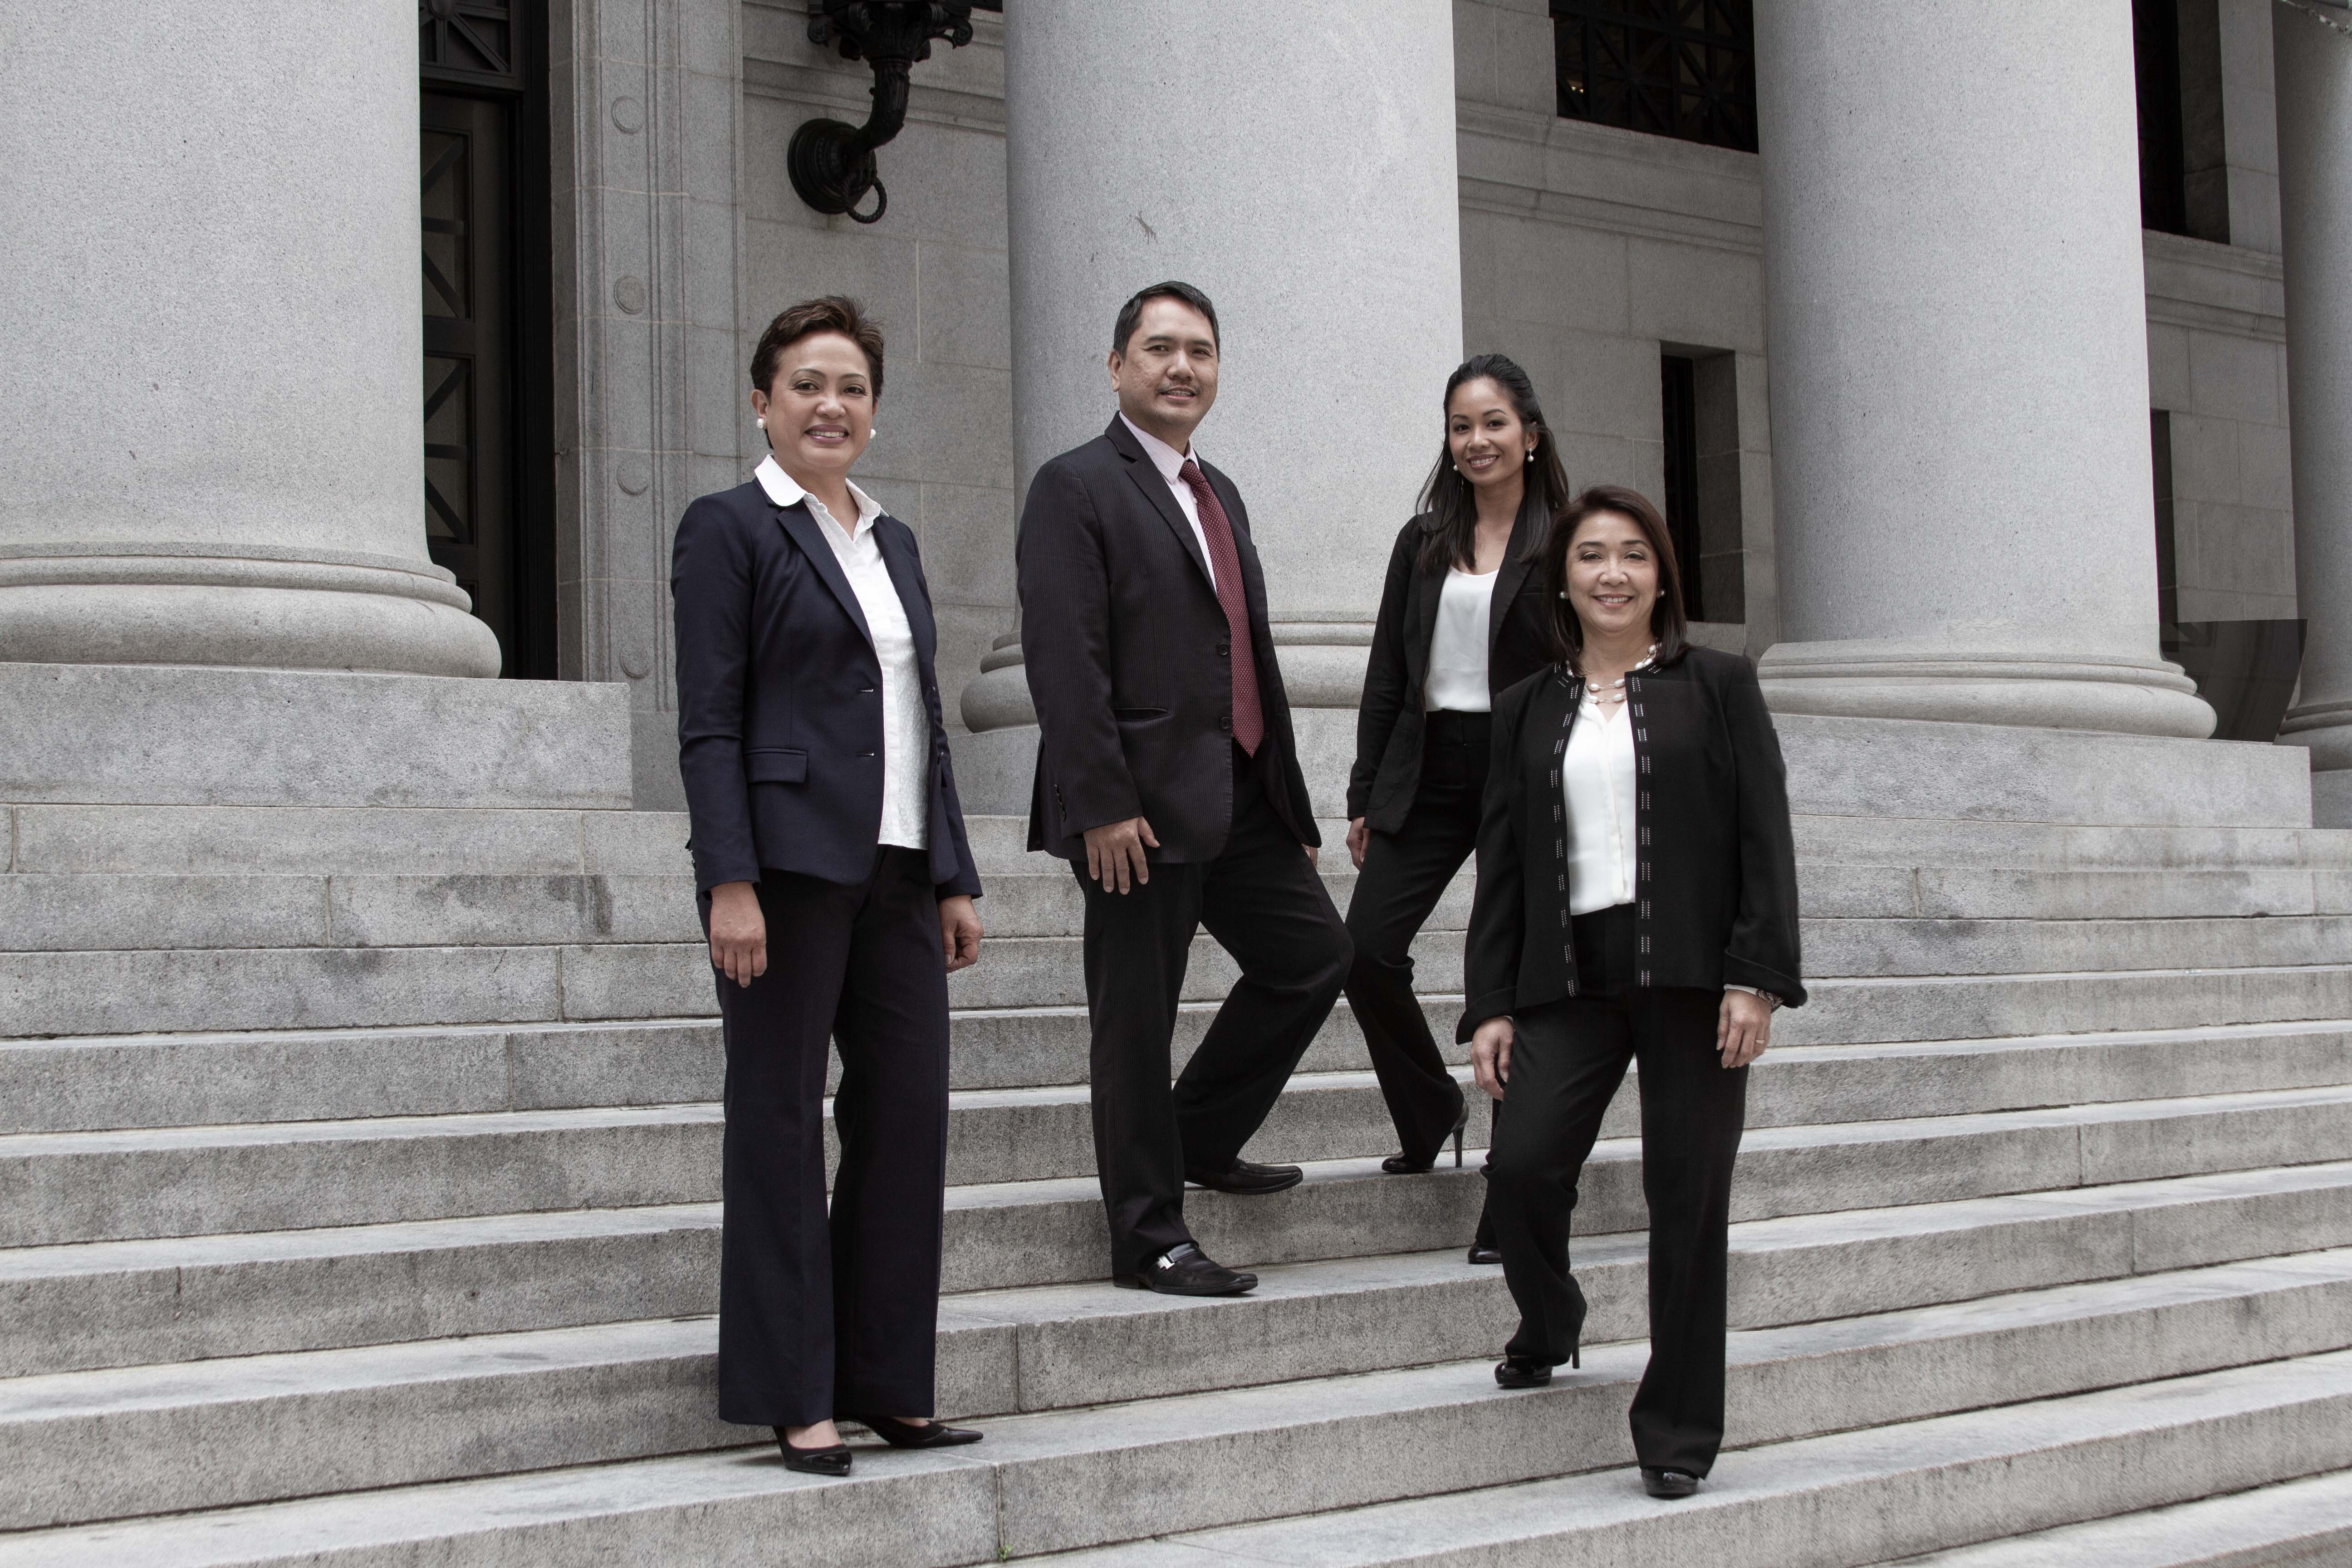 Chua, Tinsay & Vega Immigration Attorneys